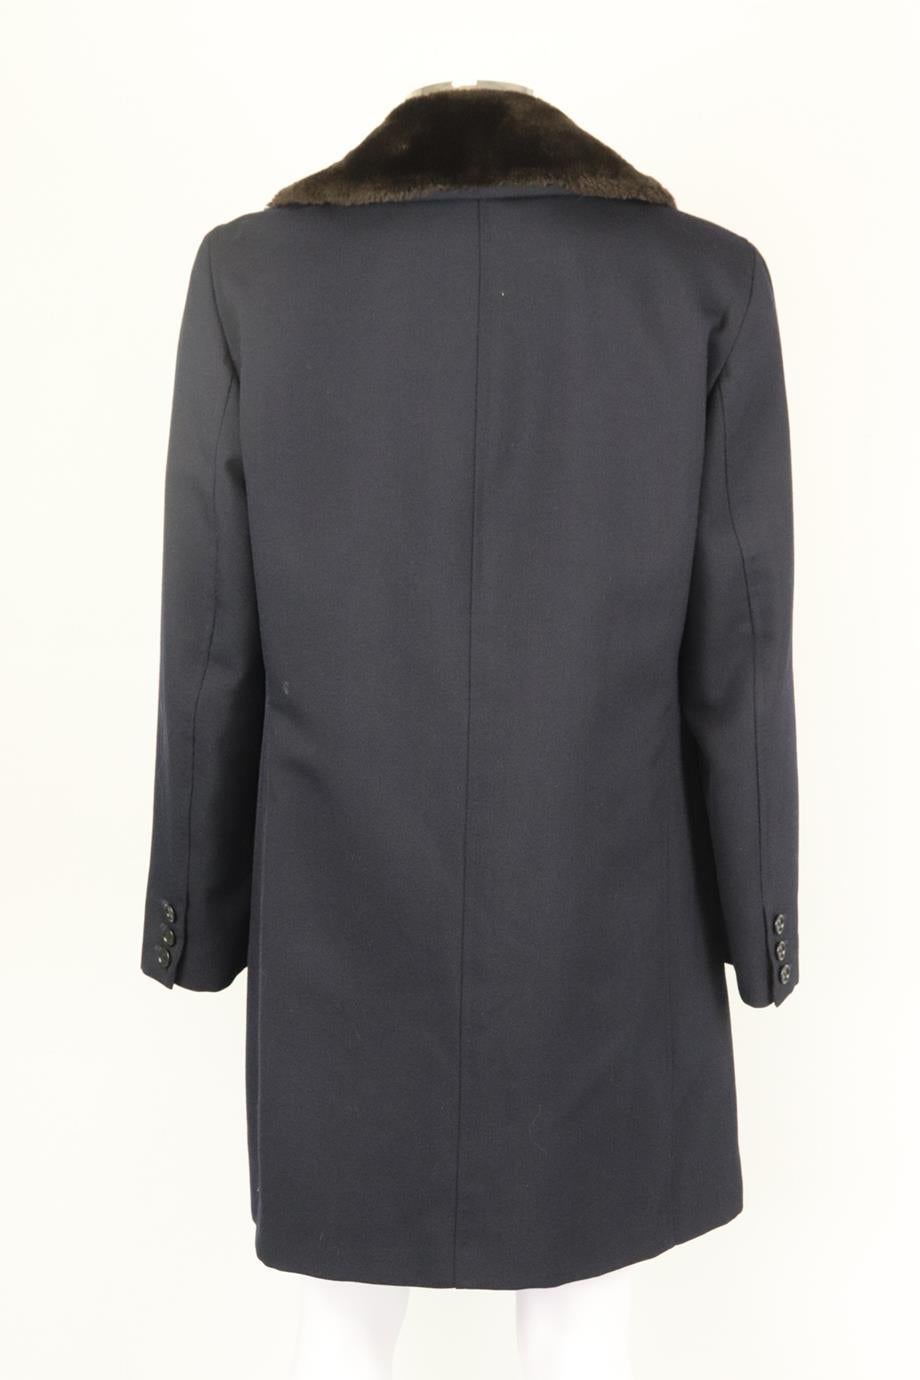 Black Dolce And Gabbana Men's Shearling Trimmed Wool Blend Coat It 48 Uk/us Chest 38